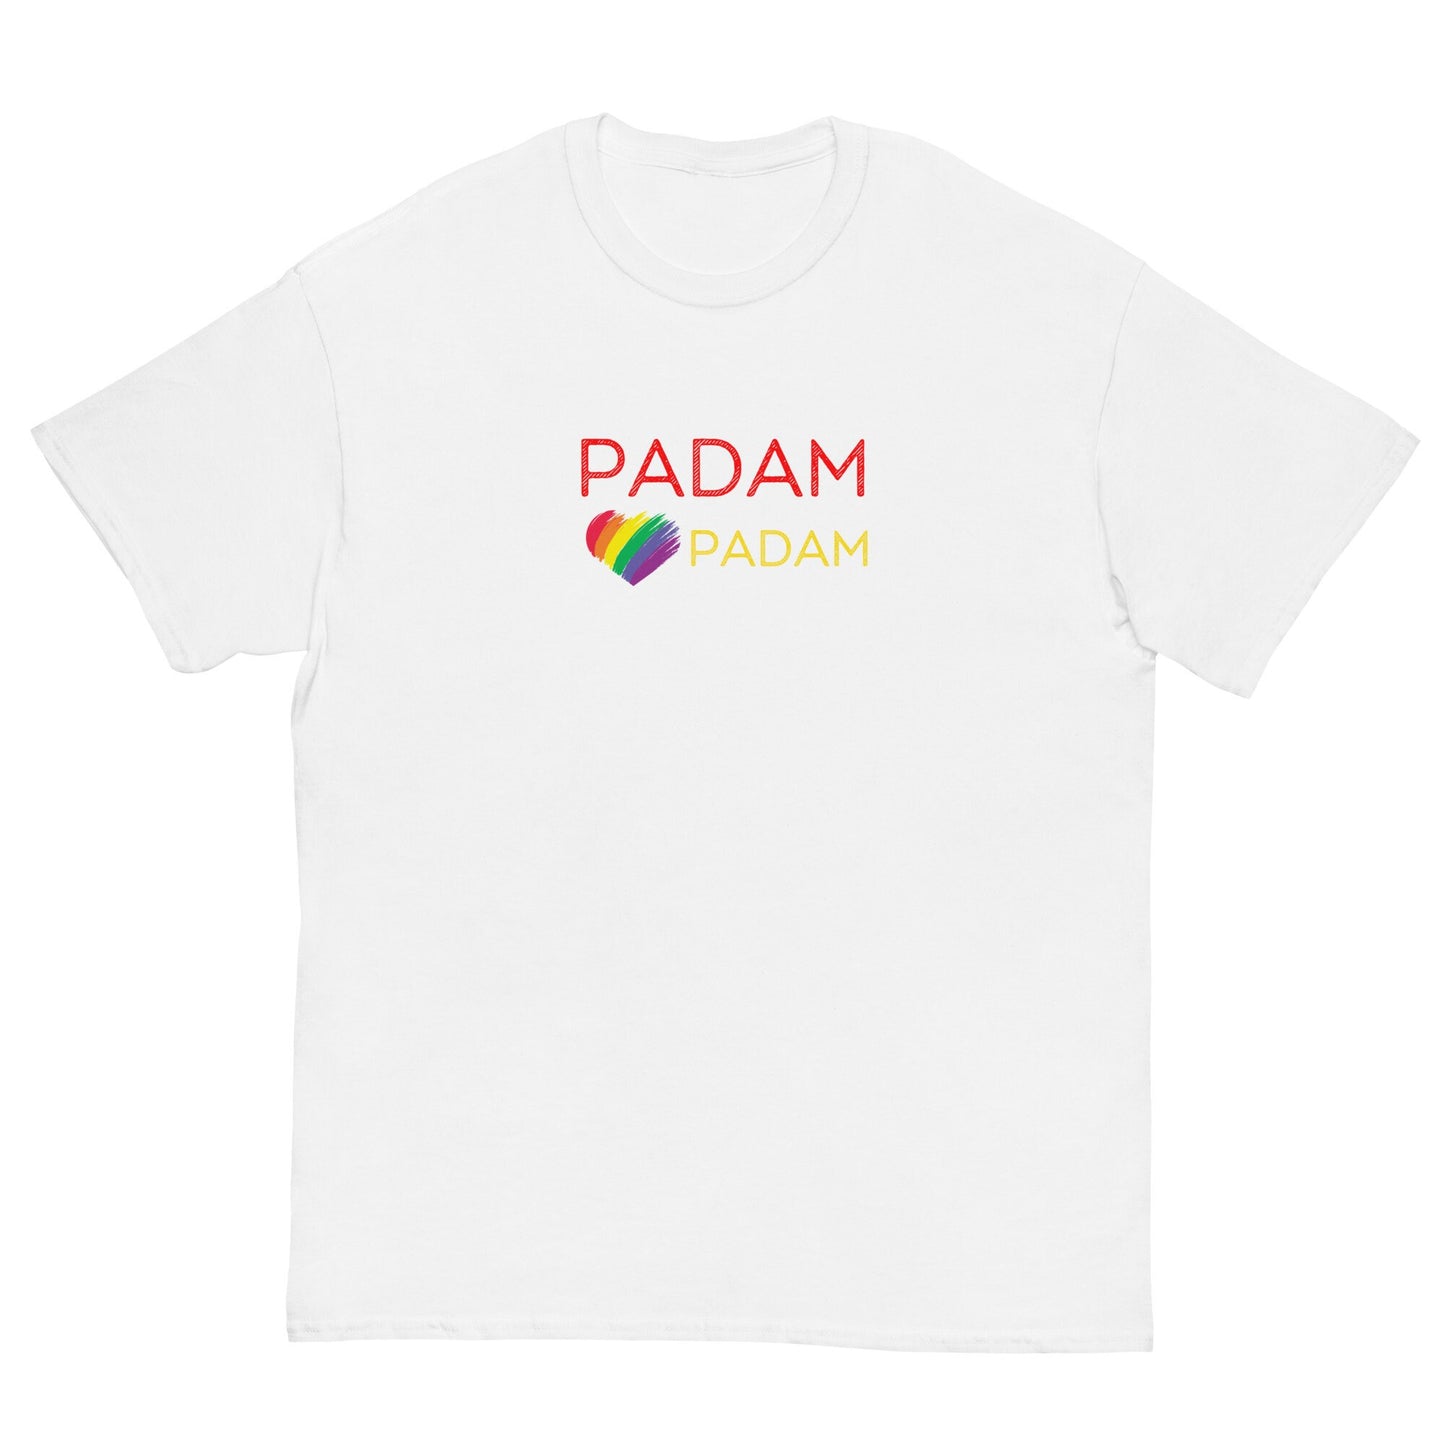 Padam Padam T-shirt with Rainbow Heart - Pride LGBT Fashion, Gay Icon shirt, Kylie Minogue, aromantic gay pride, asexual, gender fluid tee